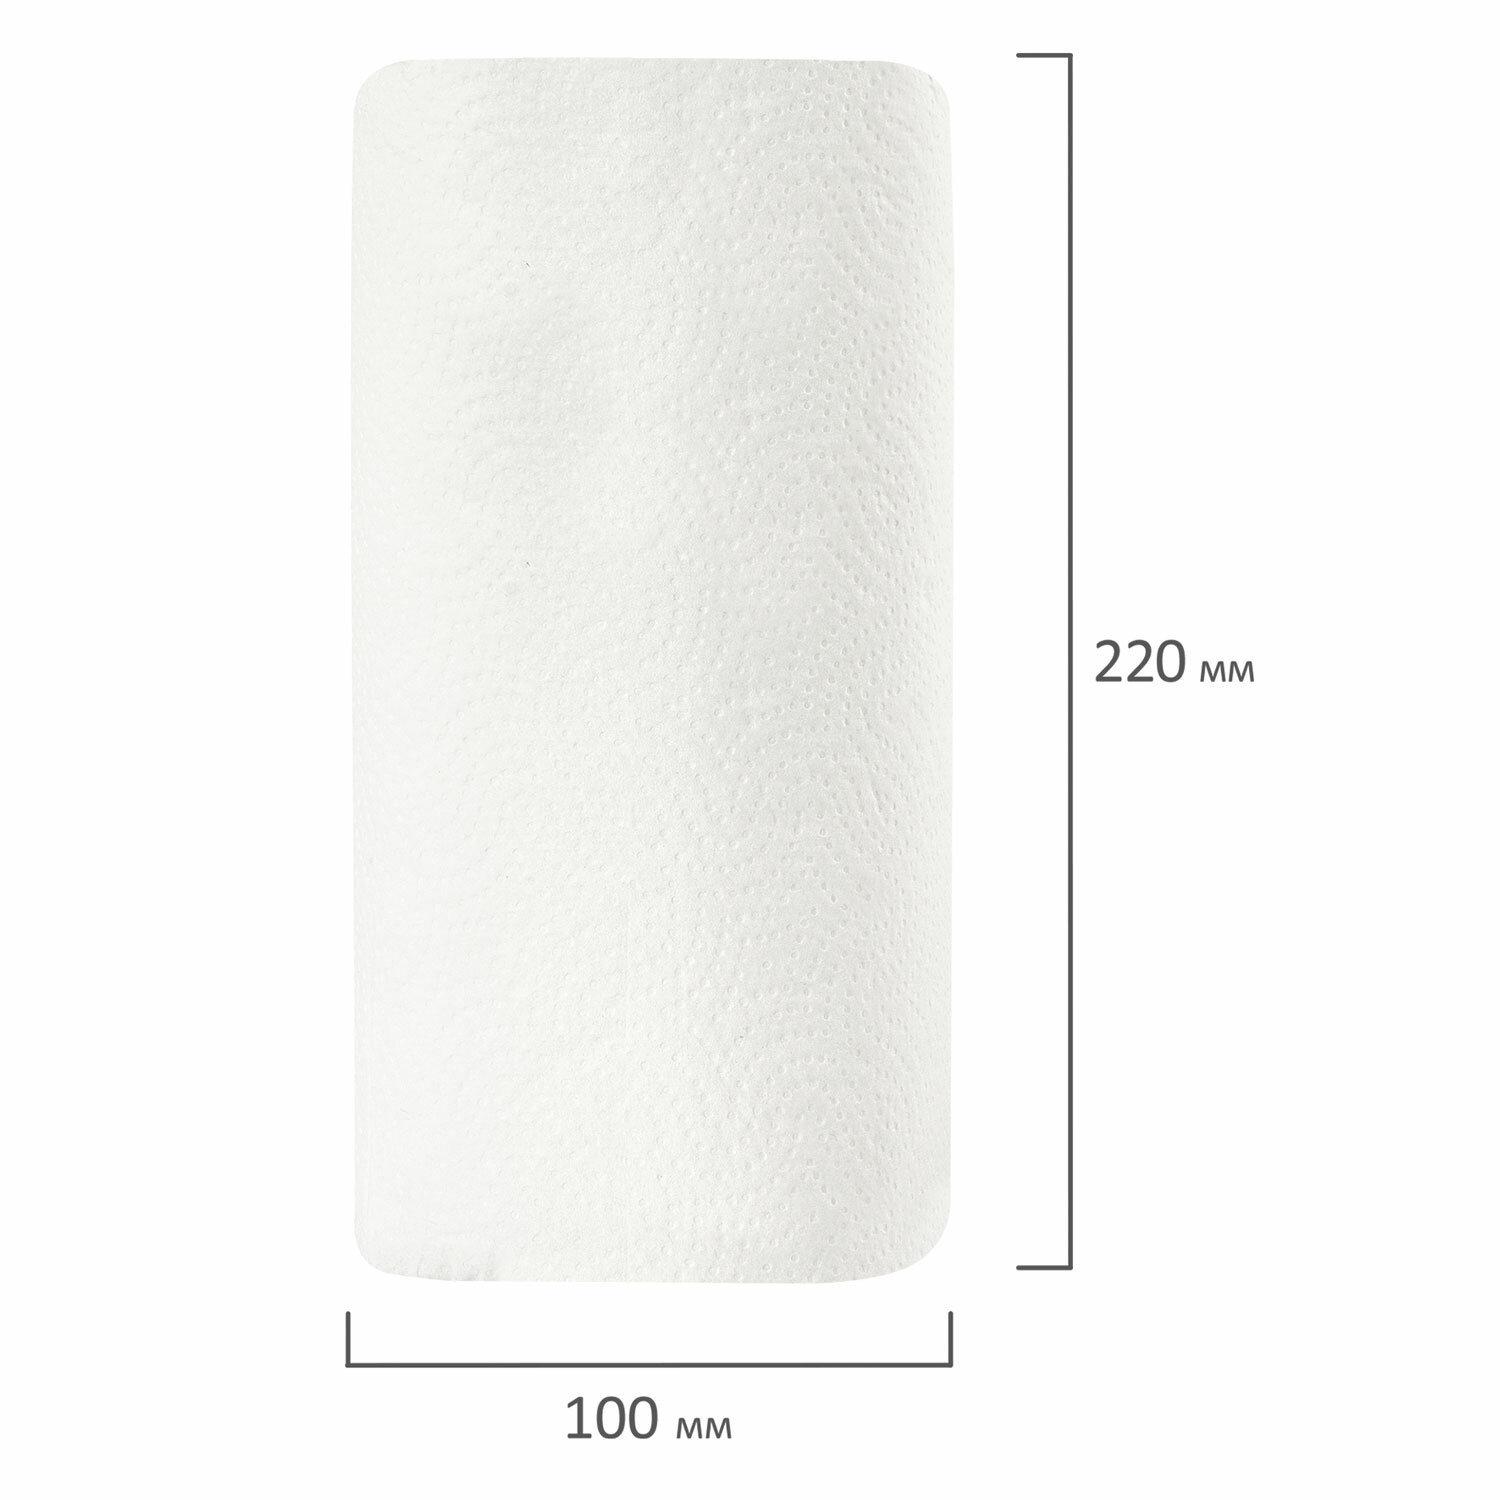 Полотенца бумажные бытовые. Бумажные полотенца лайма23×23. Laima полотенца бумажные.